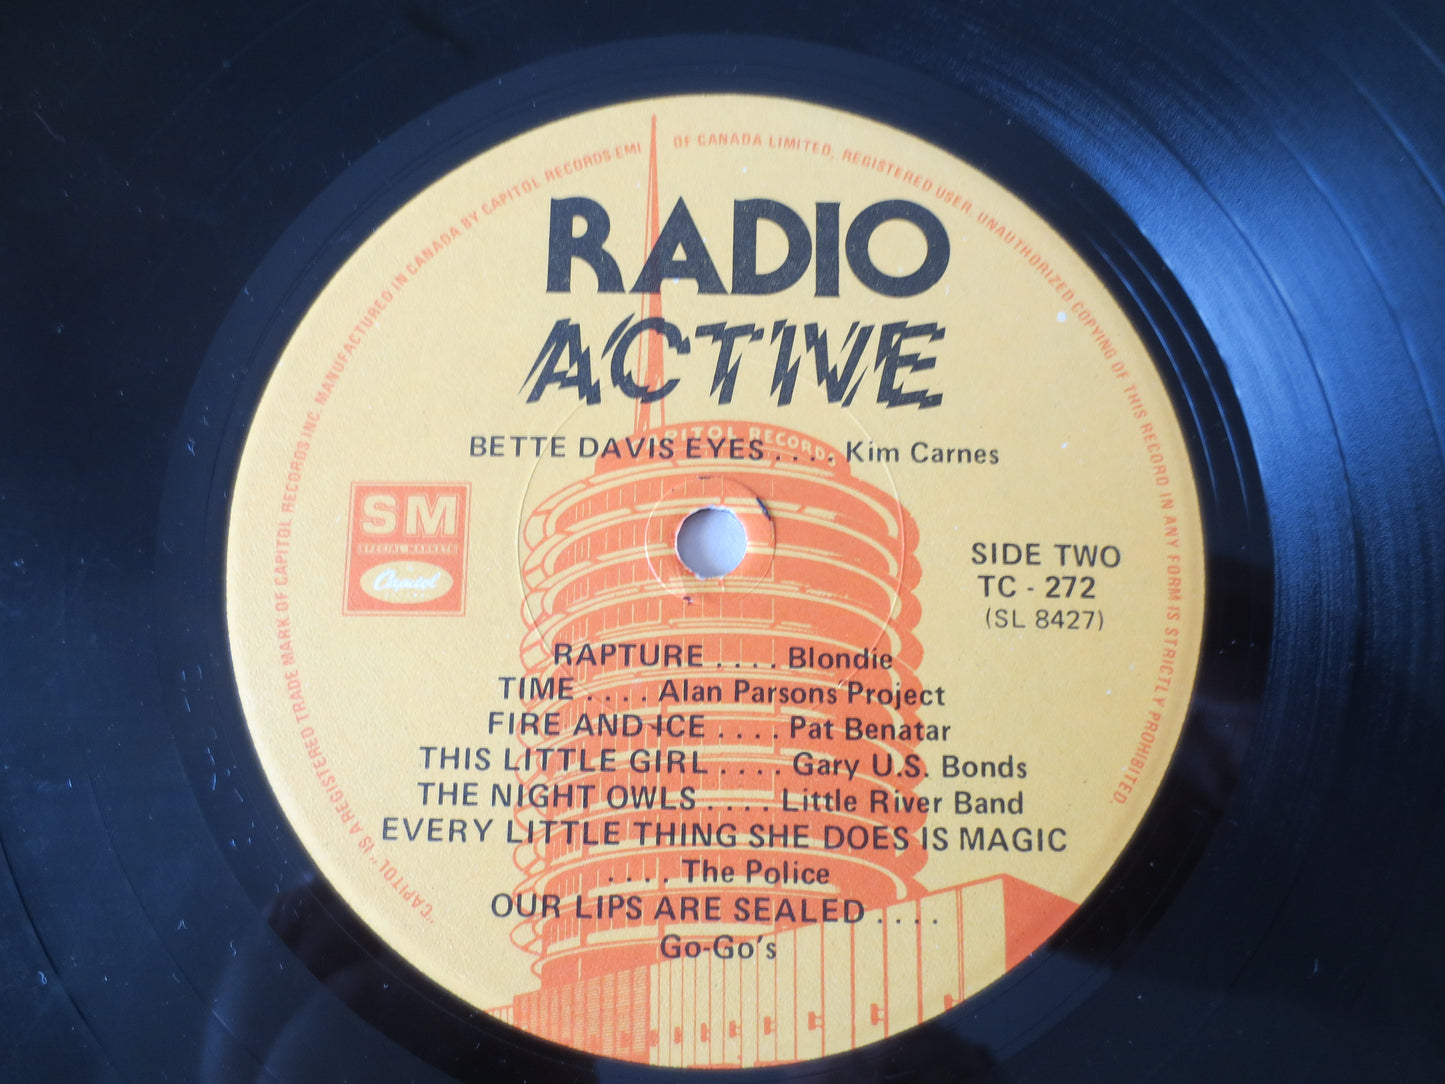 K-TEL Records, RADIO Active, K-TEL Albums, Vintage Vinyl, K-Tel Lps, Journey Lps, Blondie Lps, The Police Lps, 1982 Records